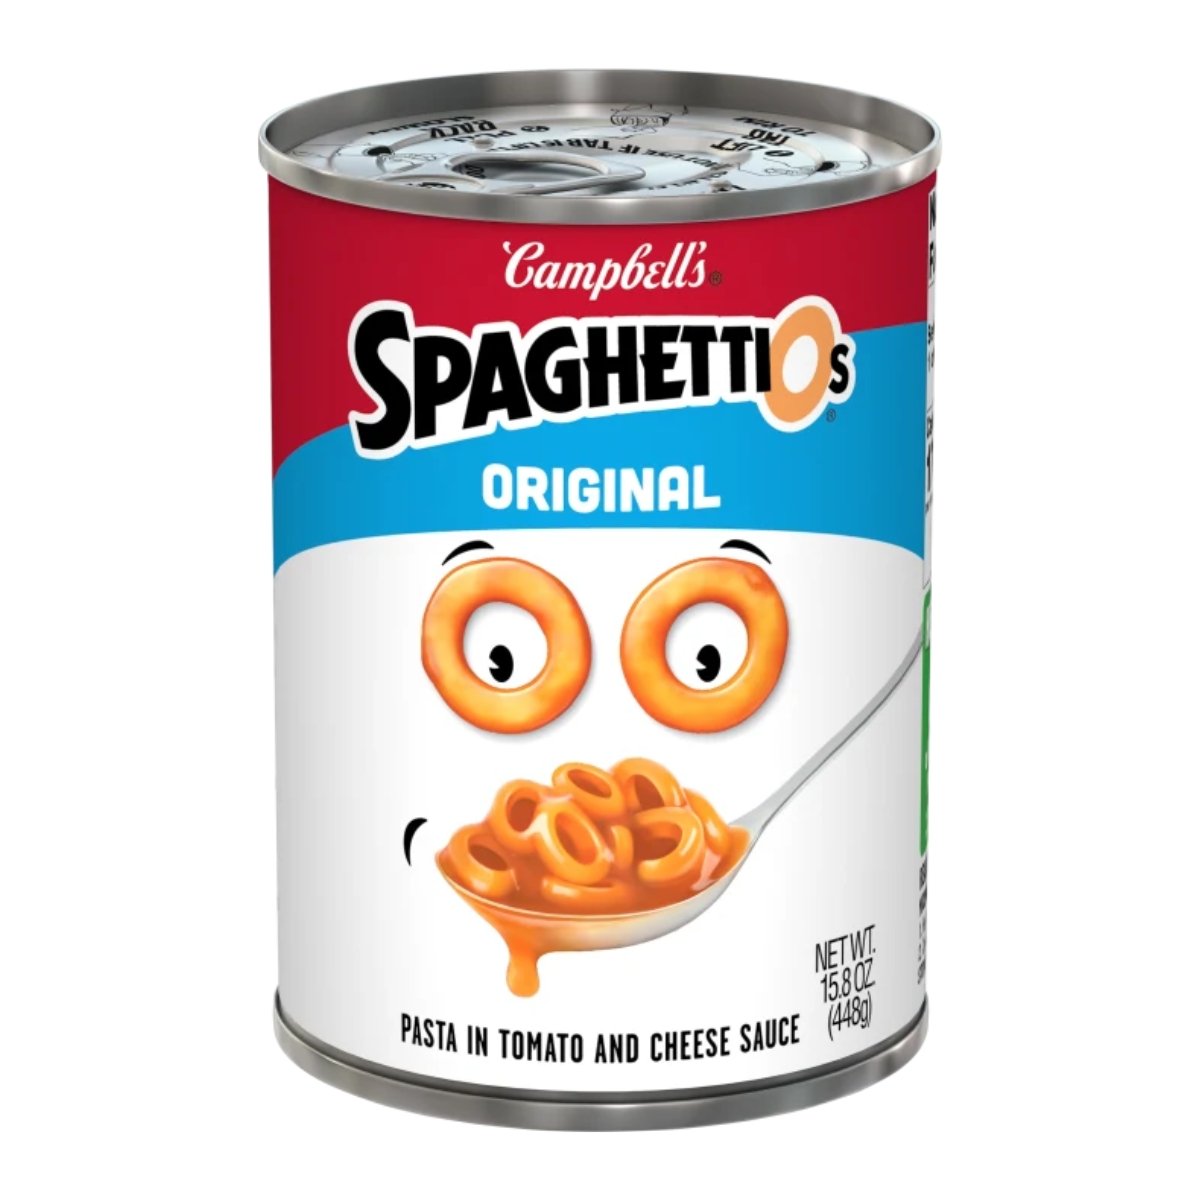 a can of SpaghettiOs Original